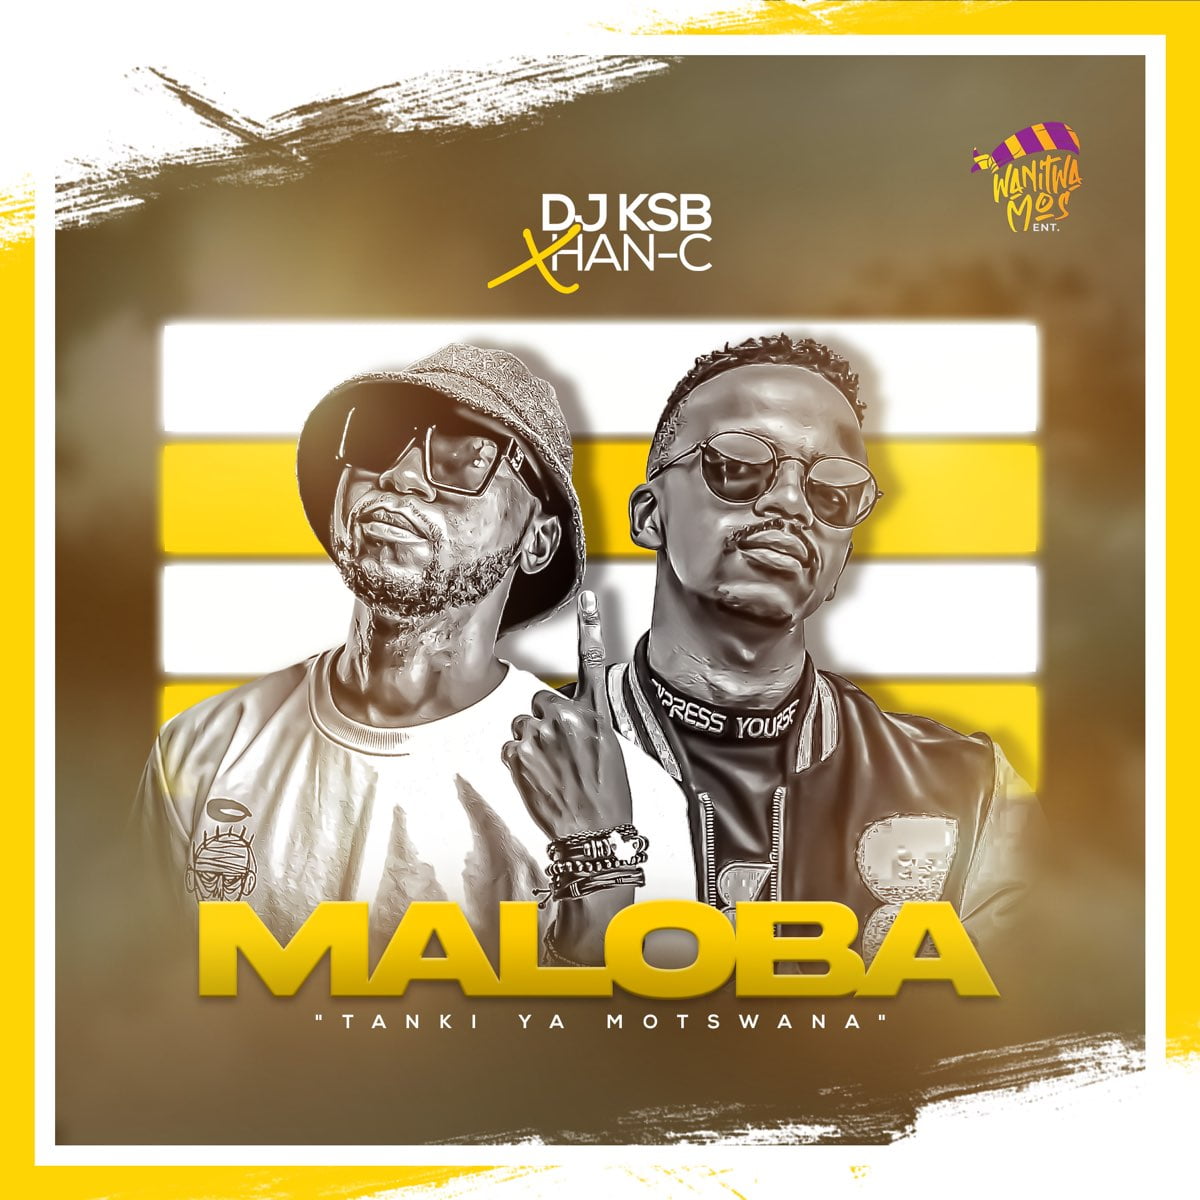 DJ KSB – Maloba ft. Han-C mp3 download free lyrics